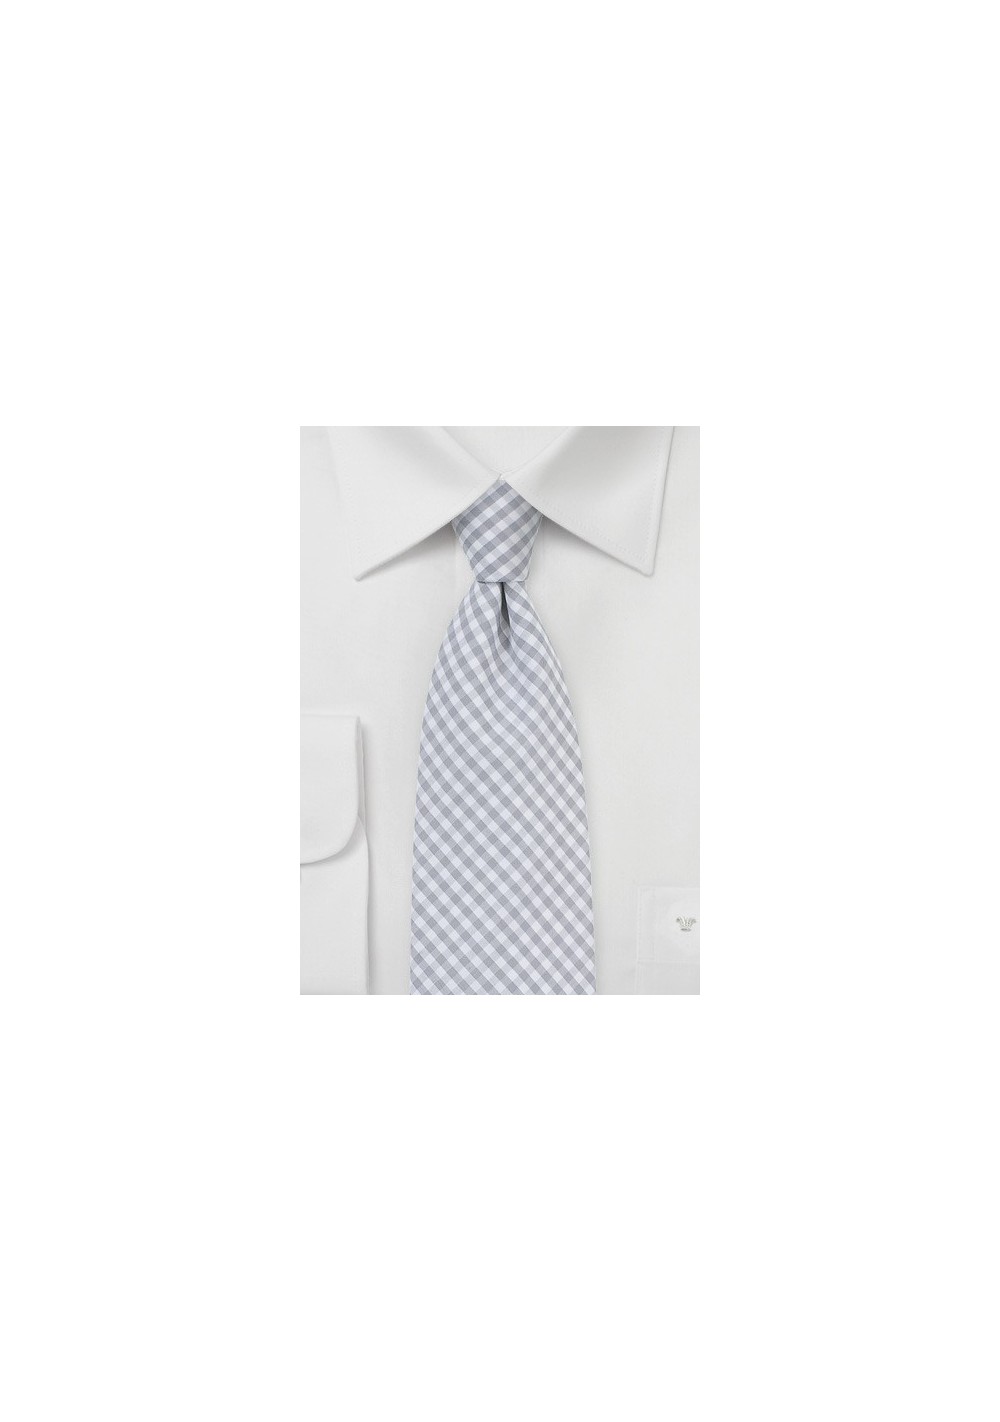 Silver and White Micro Plaid Necktie